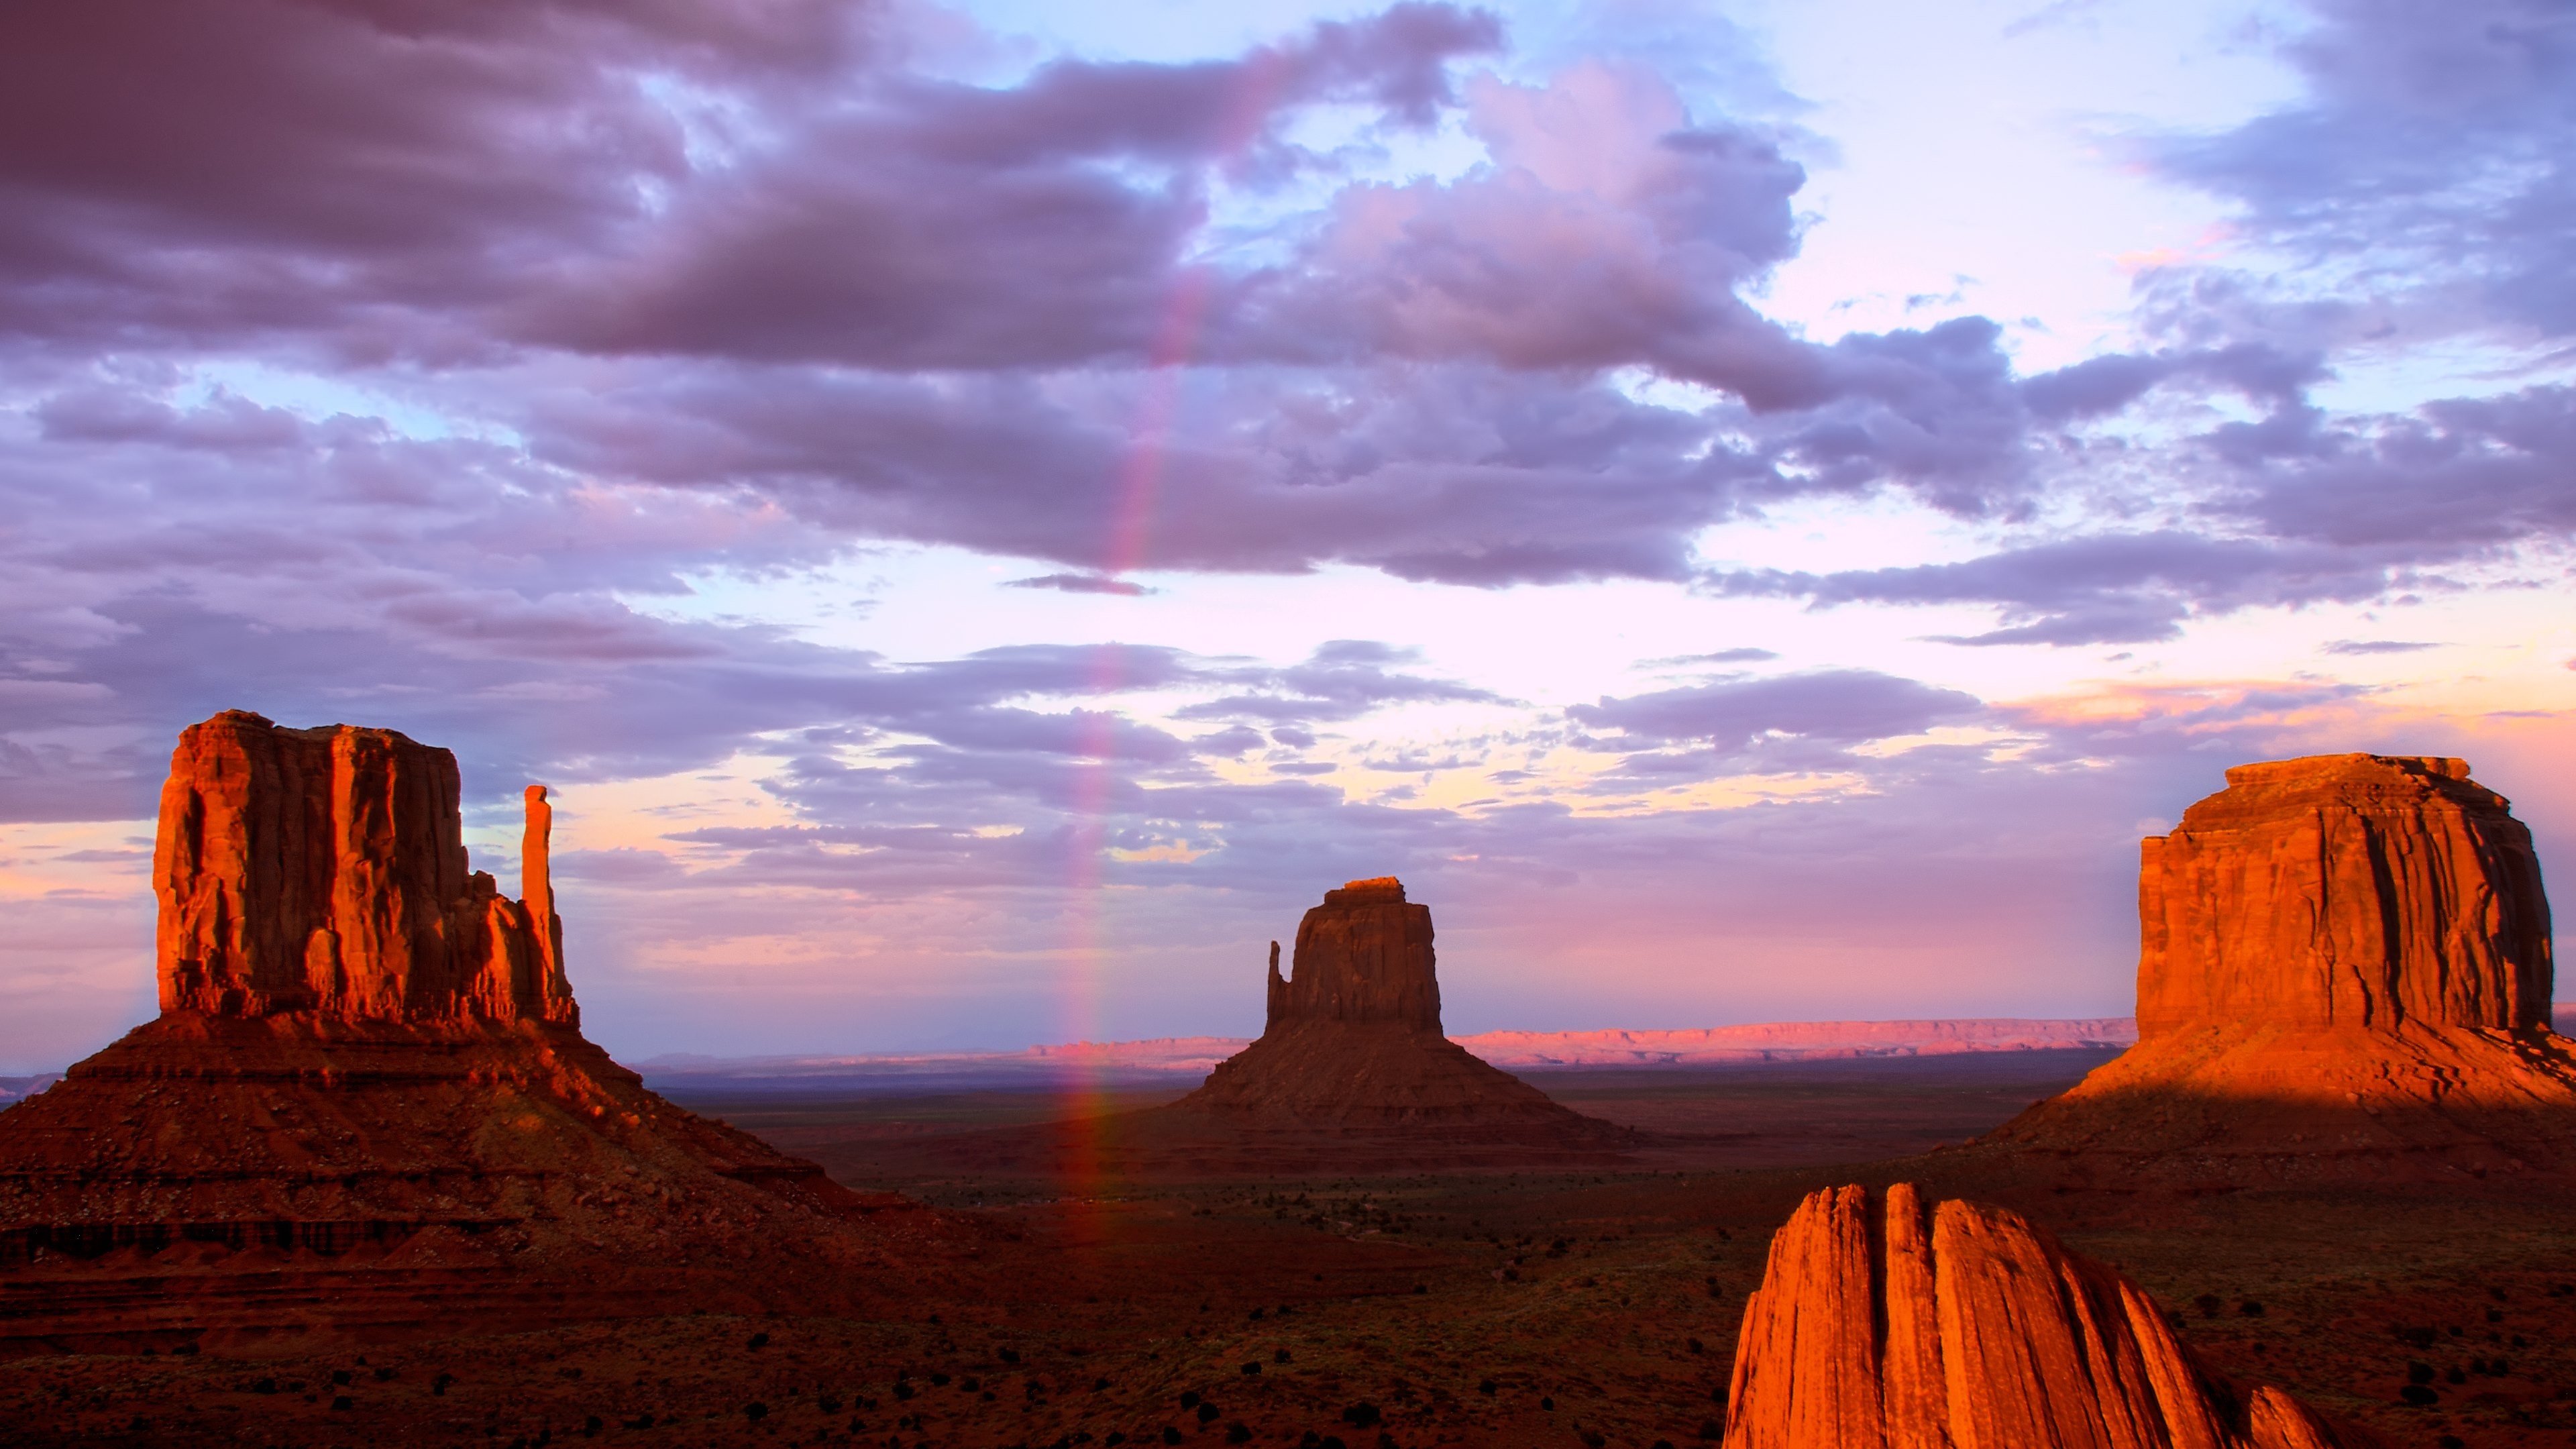 Monument Valley 4K wallpaper, Ultra HD background, Stunning nature, Desert landscapes, 3840x2160 4K Desktop